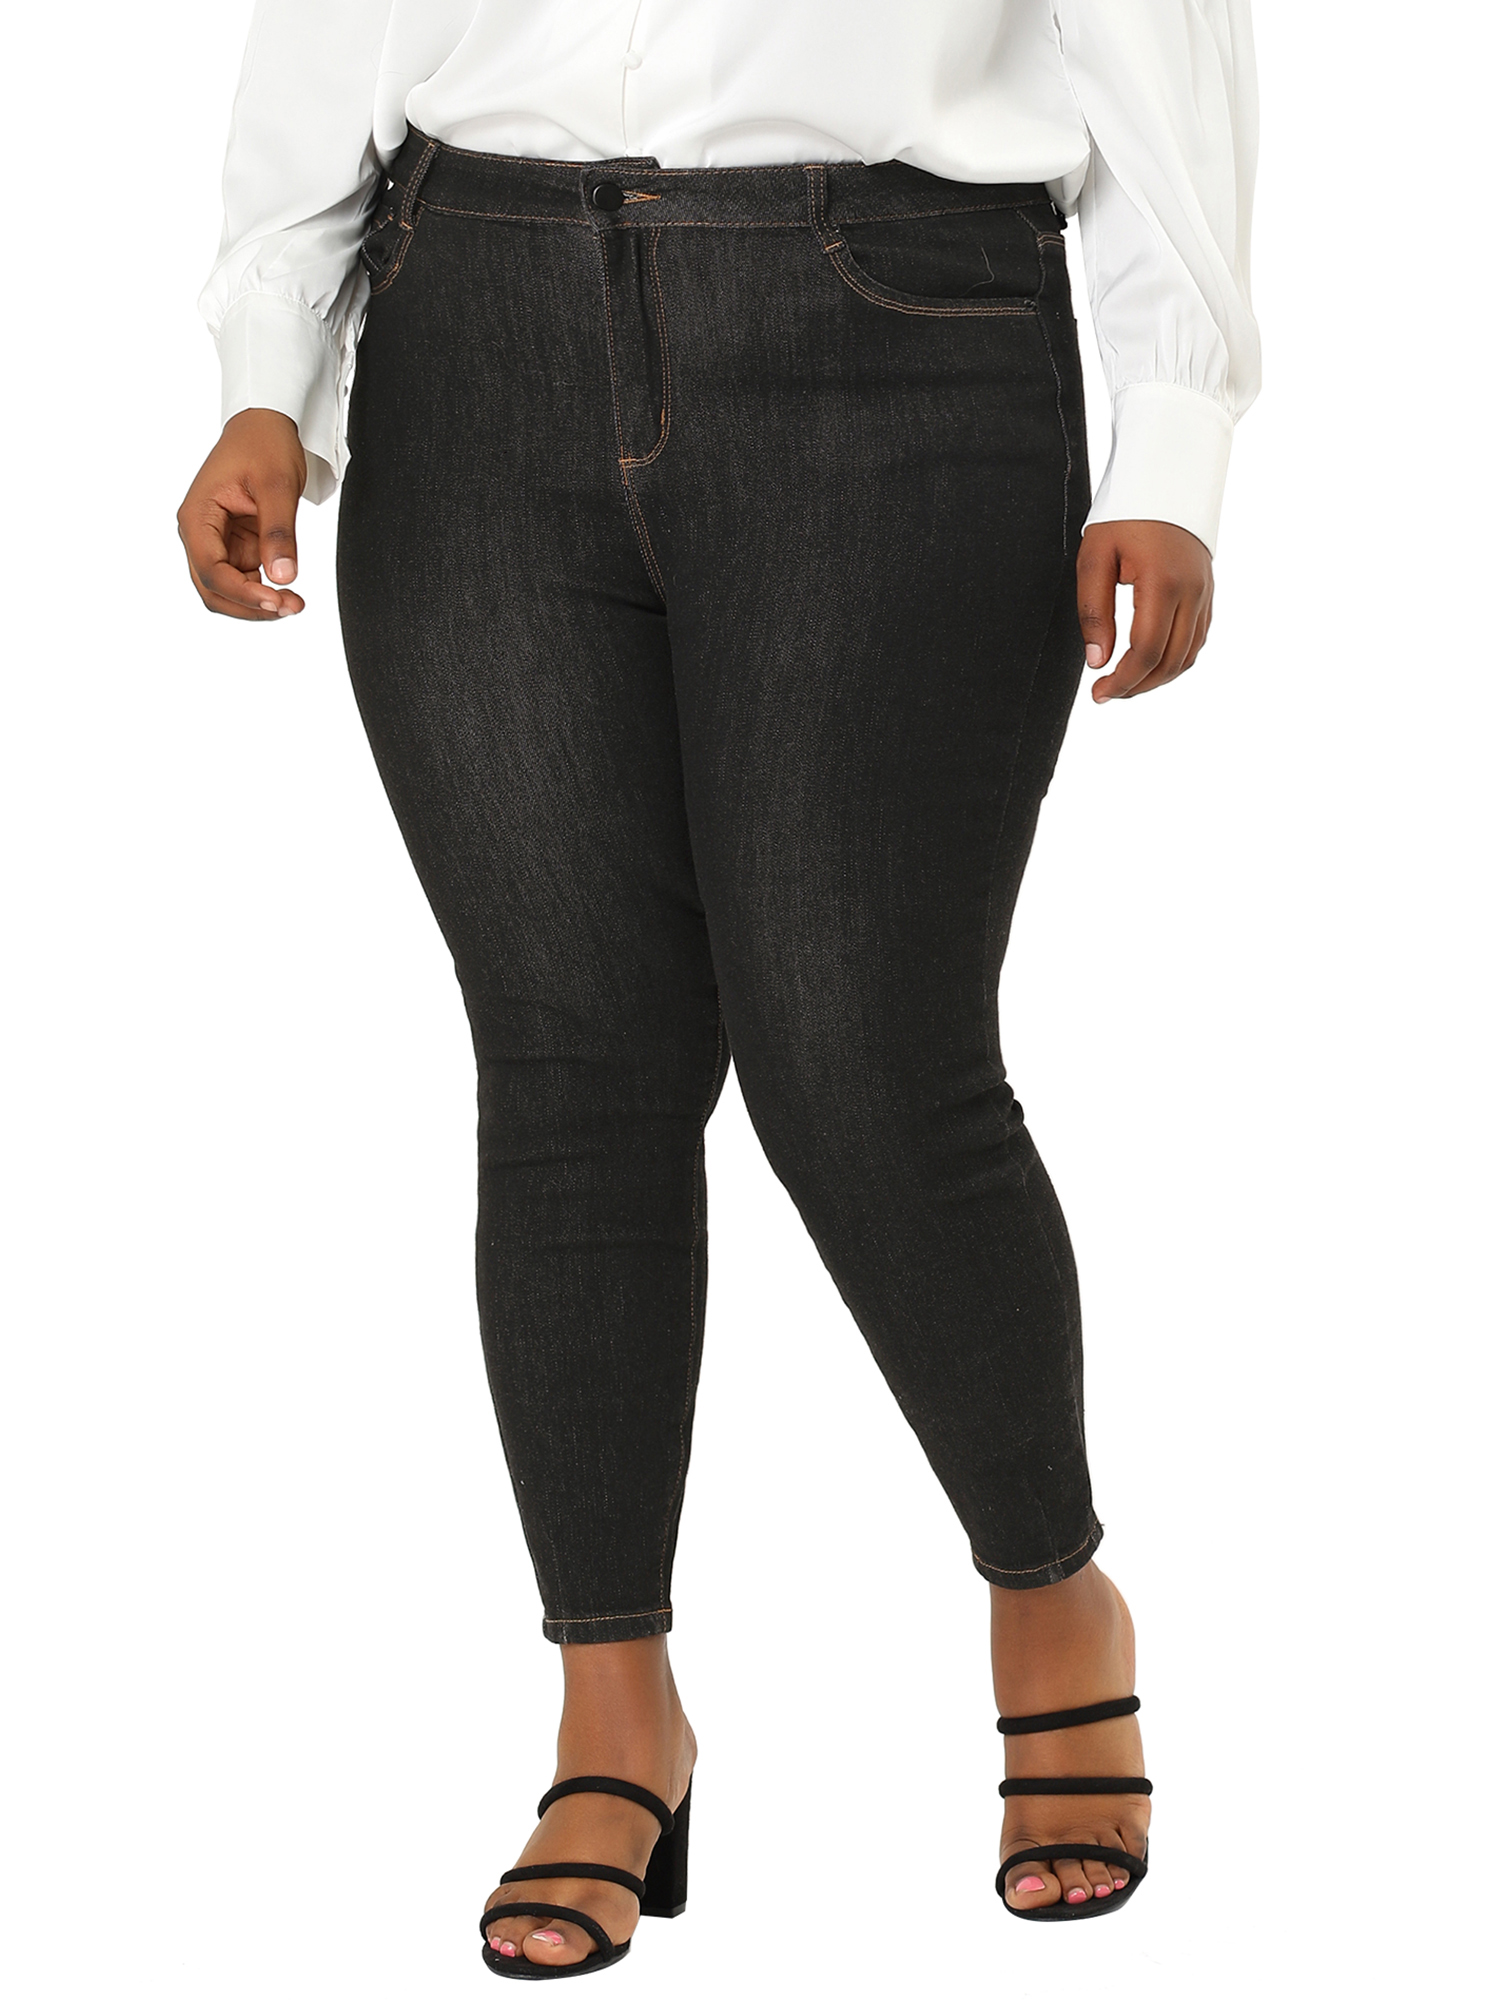 MODA NOVA Junior's Plus Size Jeans Denim Stretch Work Contrast Color Line Skinny Mid Rise Jeans Black 2X - image 1 of 5